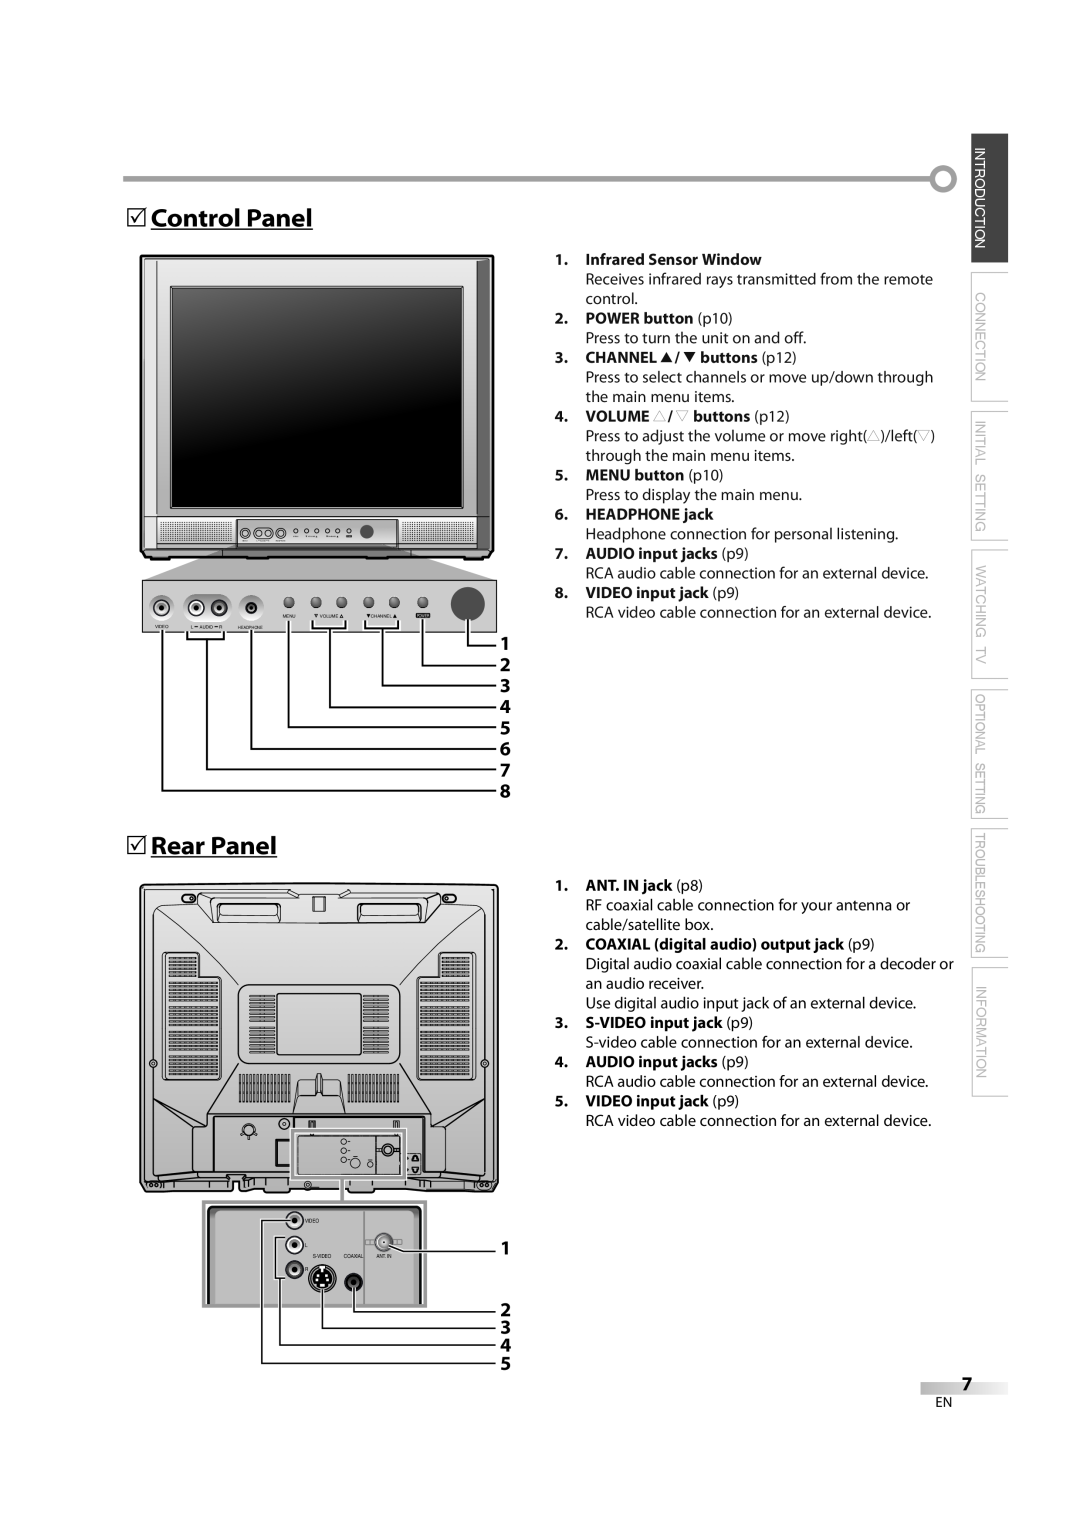 Sylvania CR202SL8 5Control Panel, 5Rear Panel, Troubleshooting Information, Infrared Sensor Window, POWER button p10 